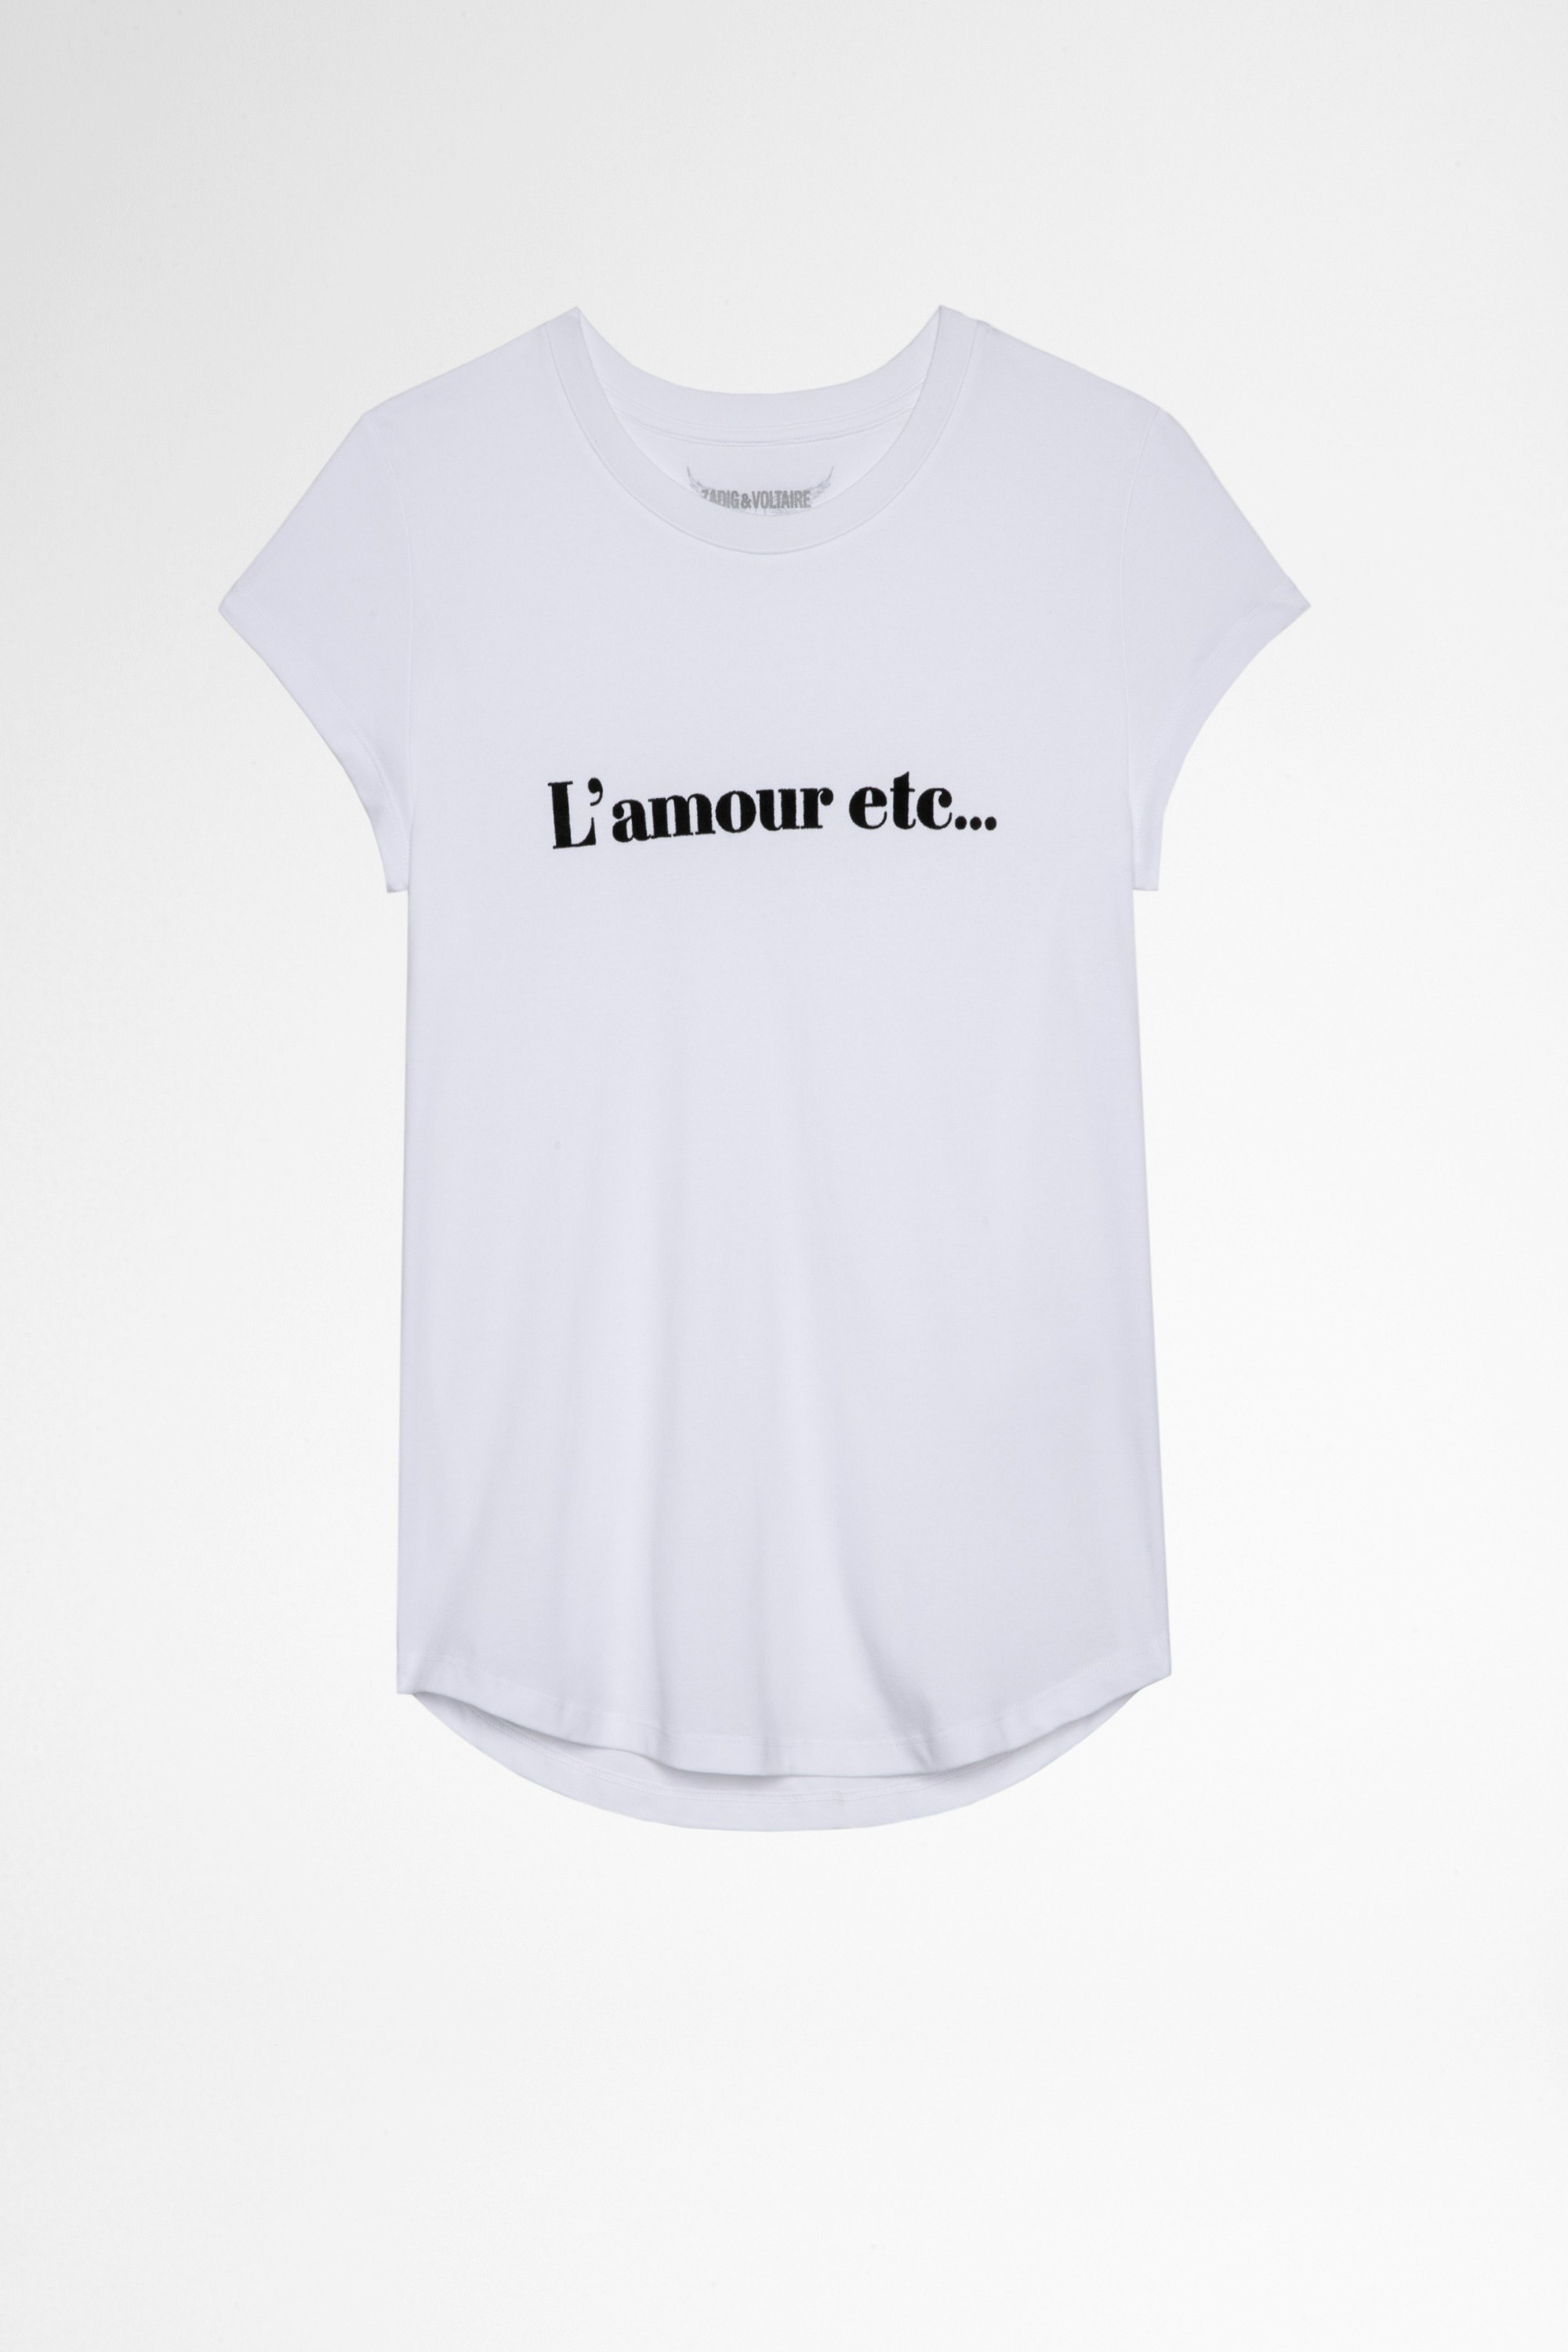 T-Shirt Woop L'amour etc T-shirt in cotone bianco L'amour etc... donna